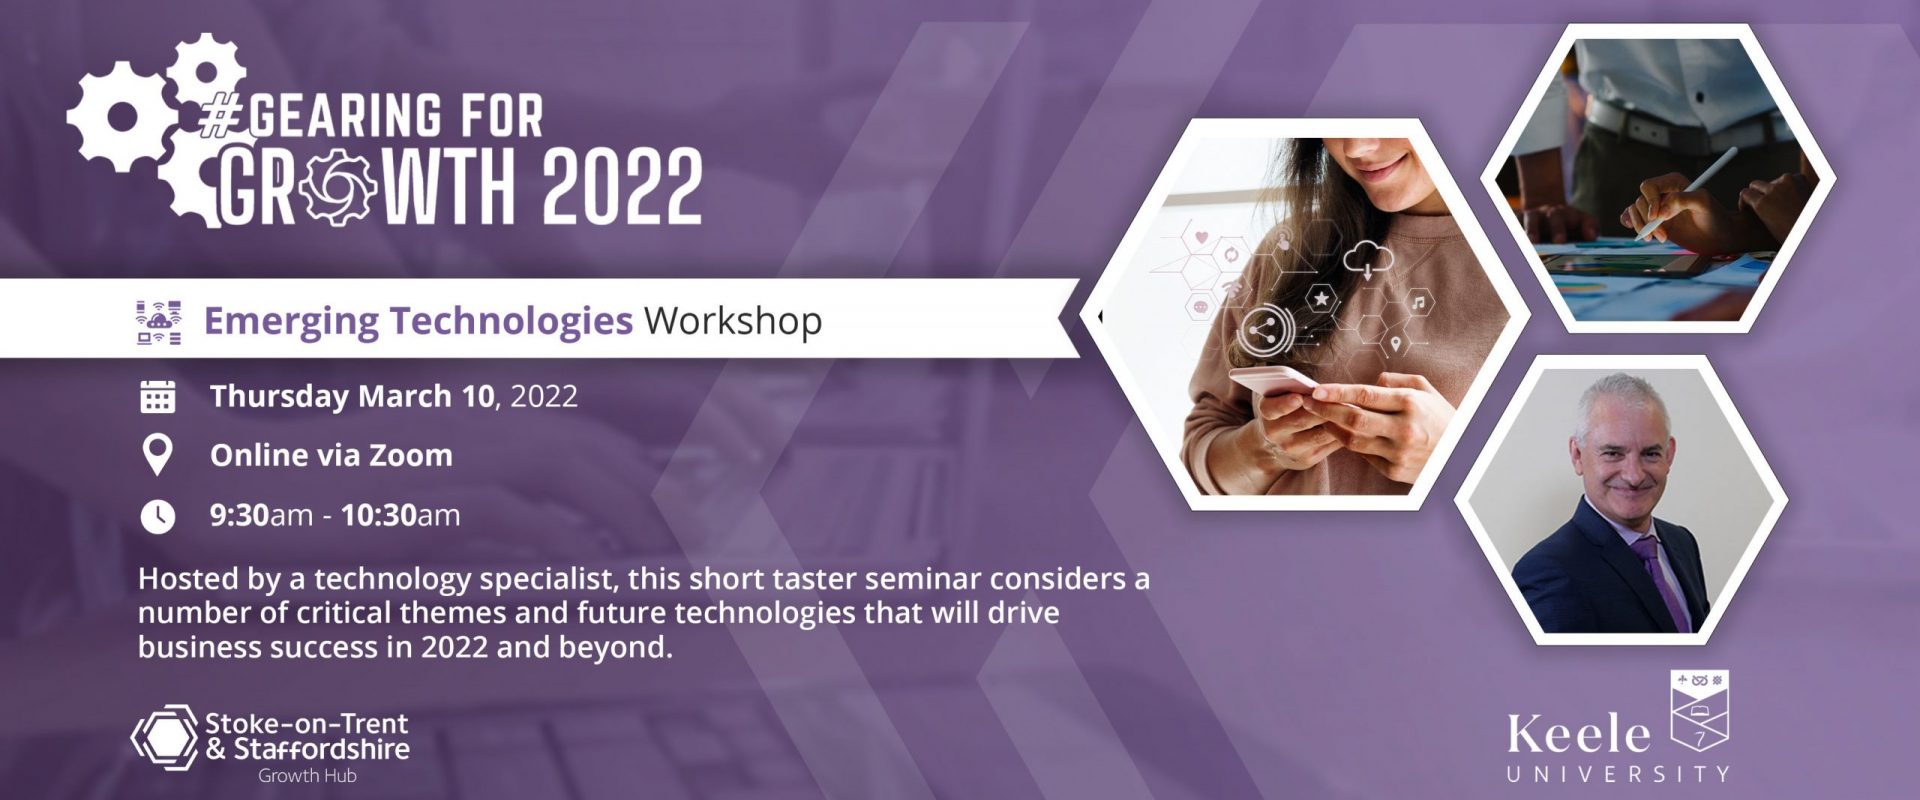 #GEARINGFORGROWTH2022: Emerging Technologies